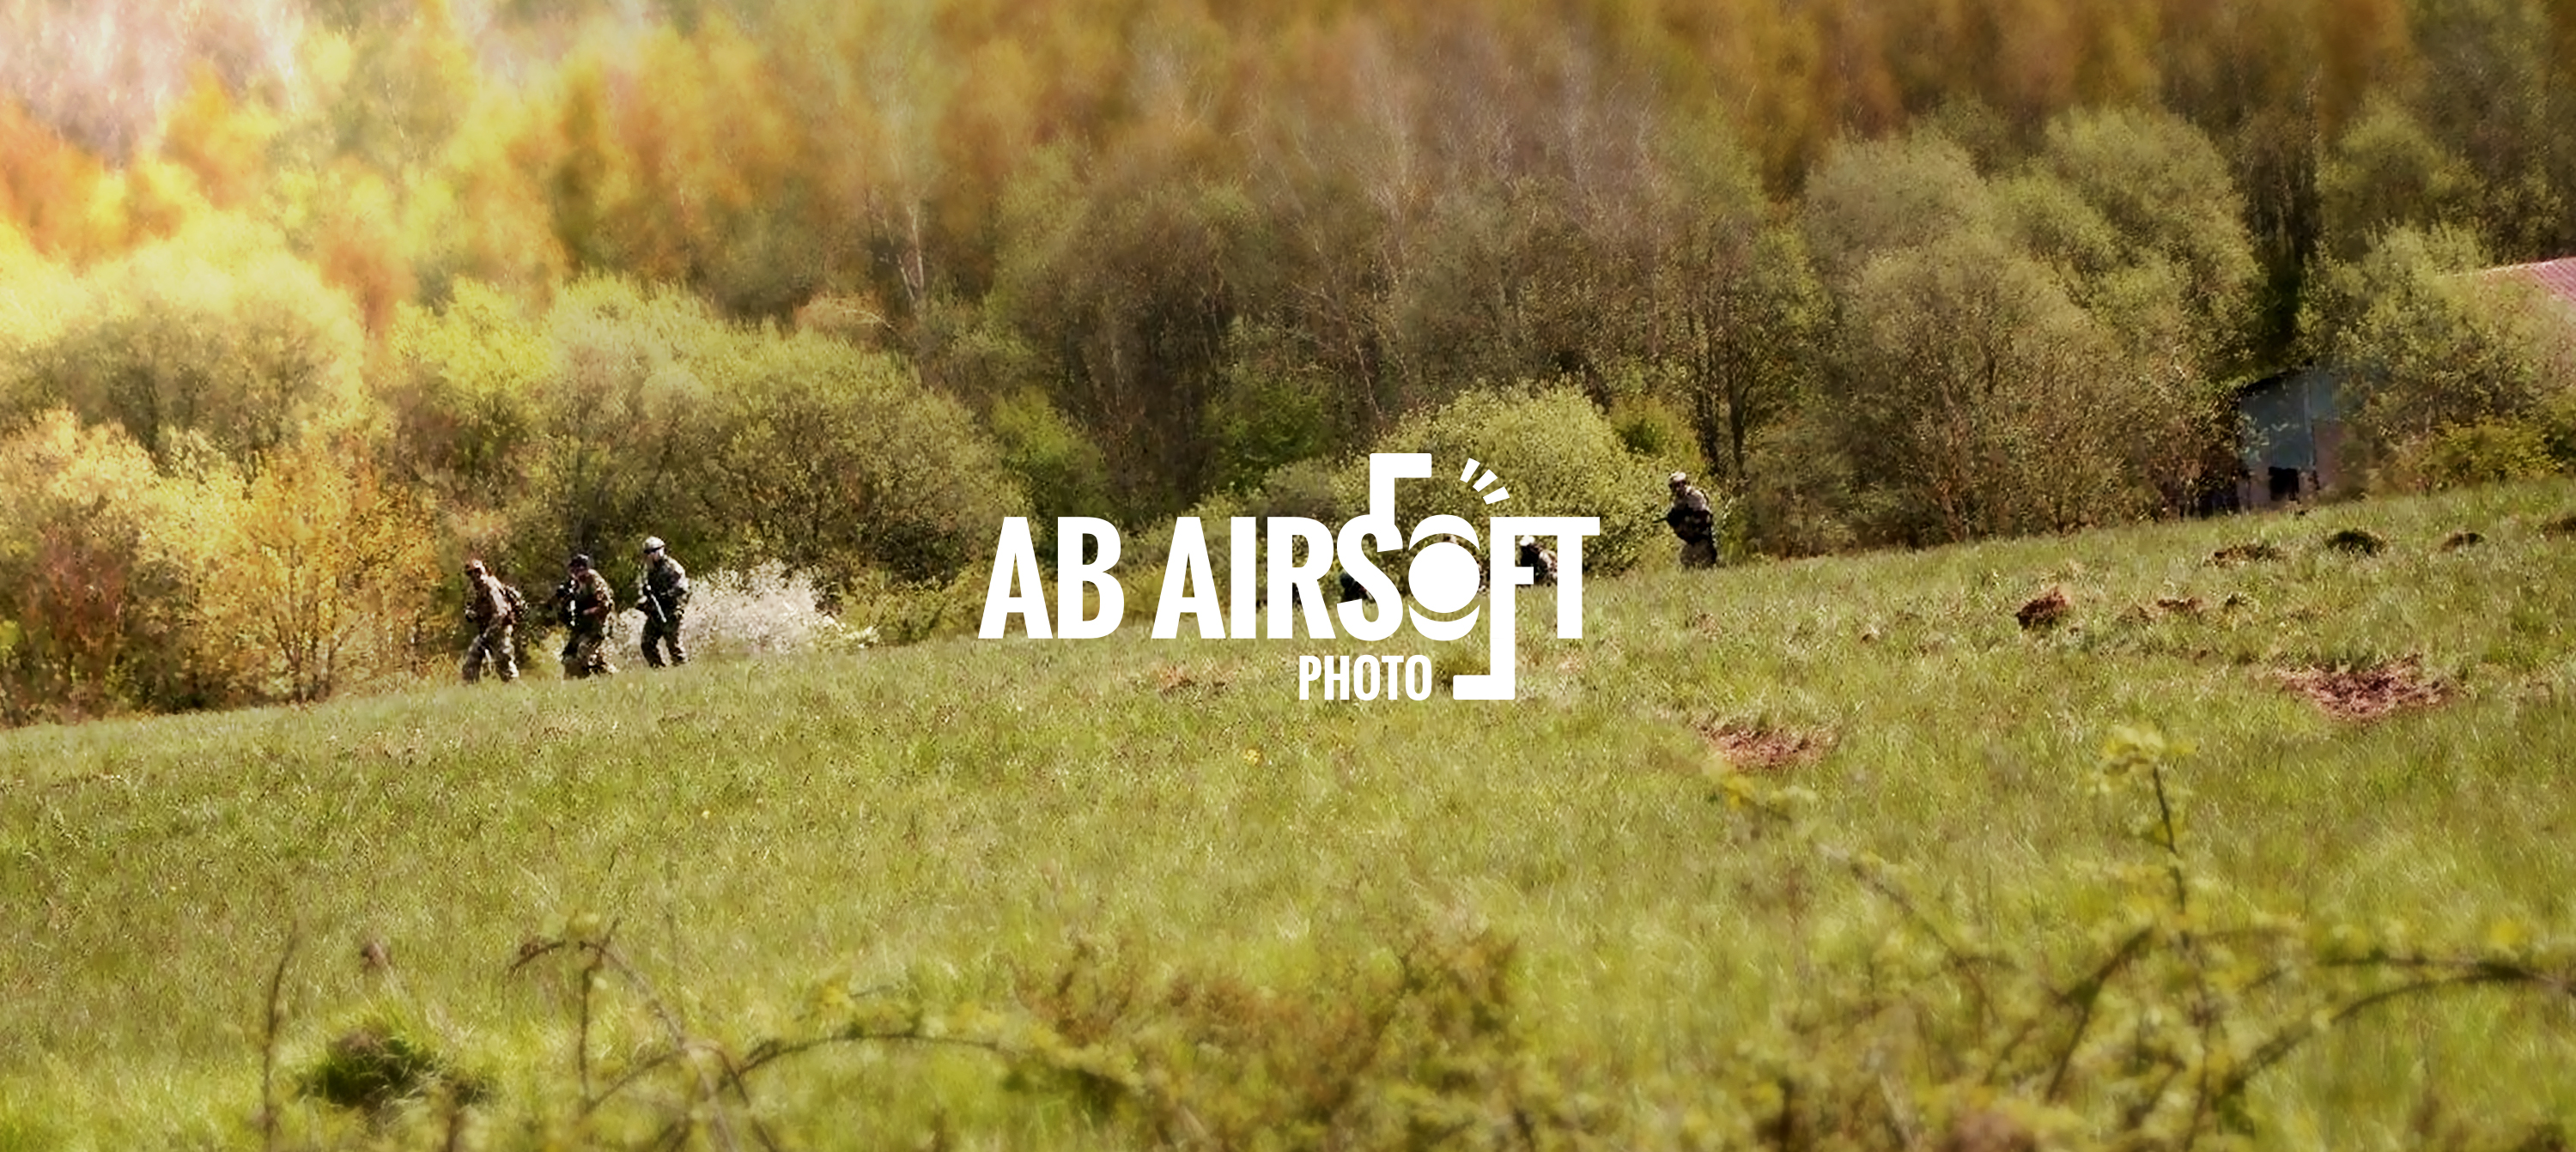 AB Airsoft Photo